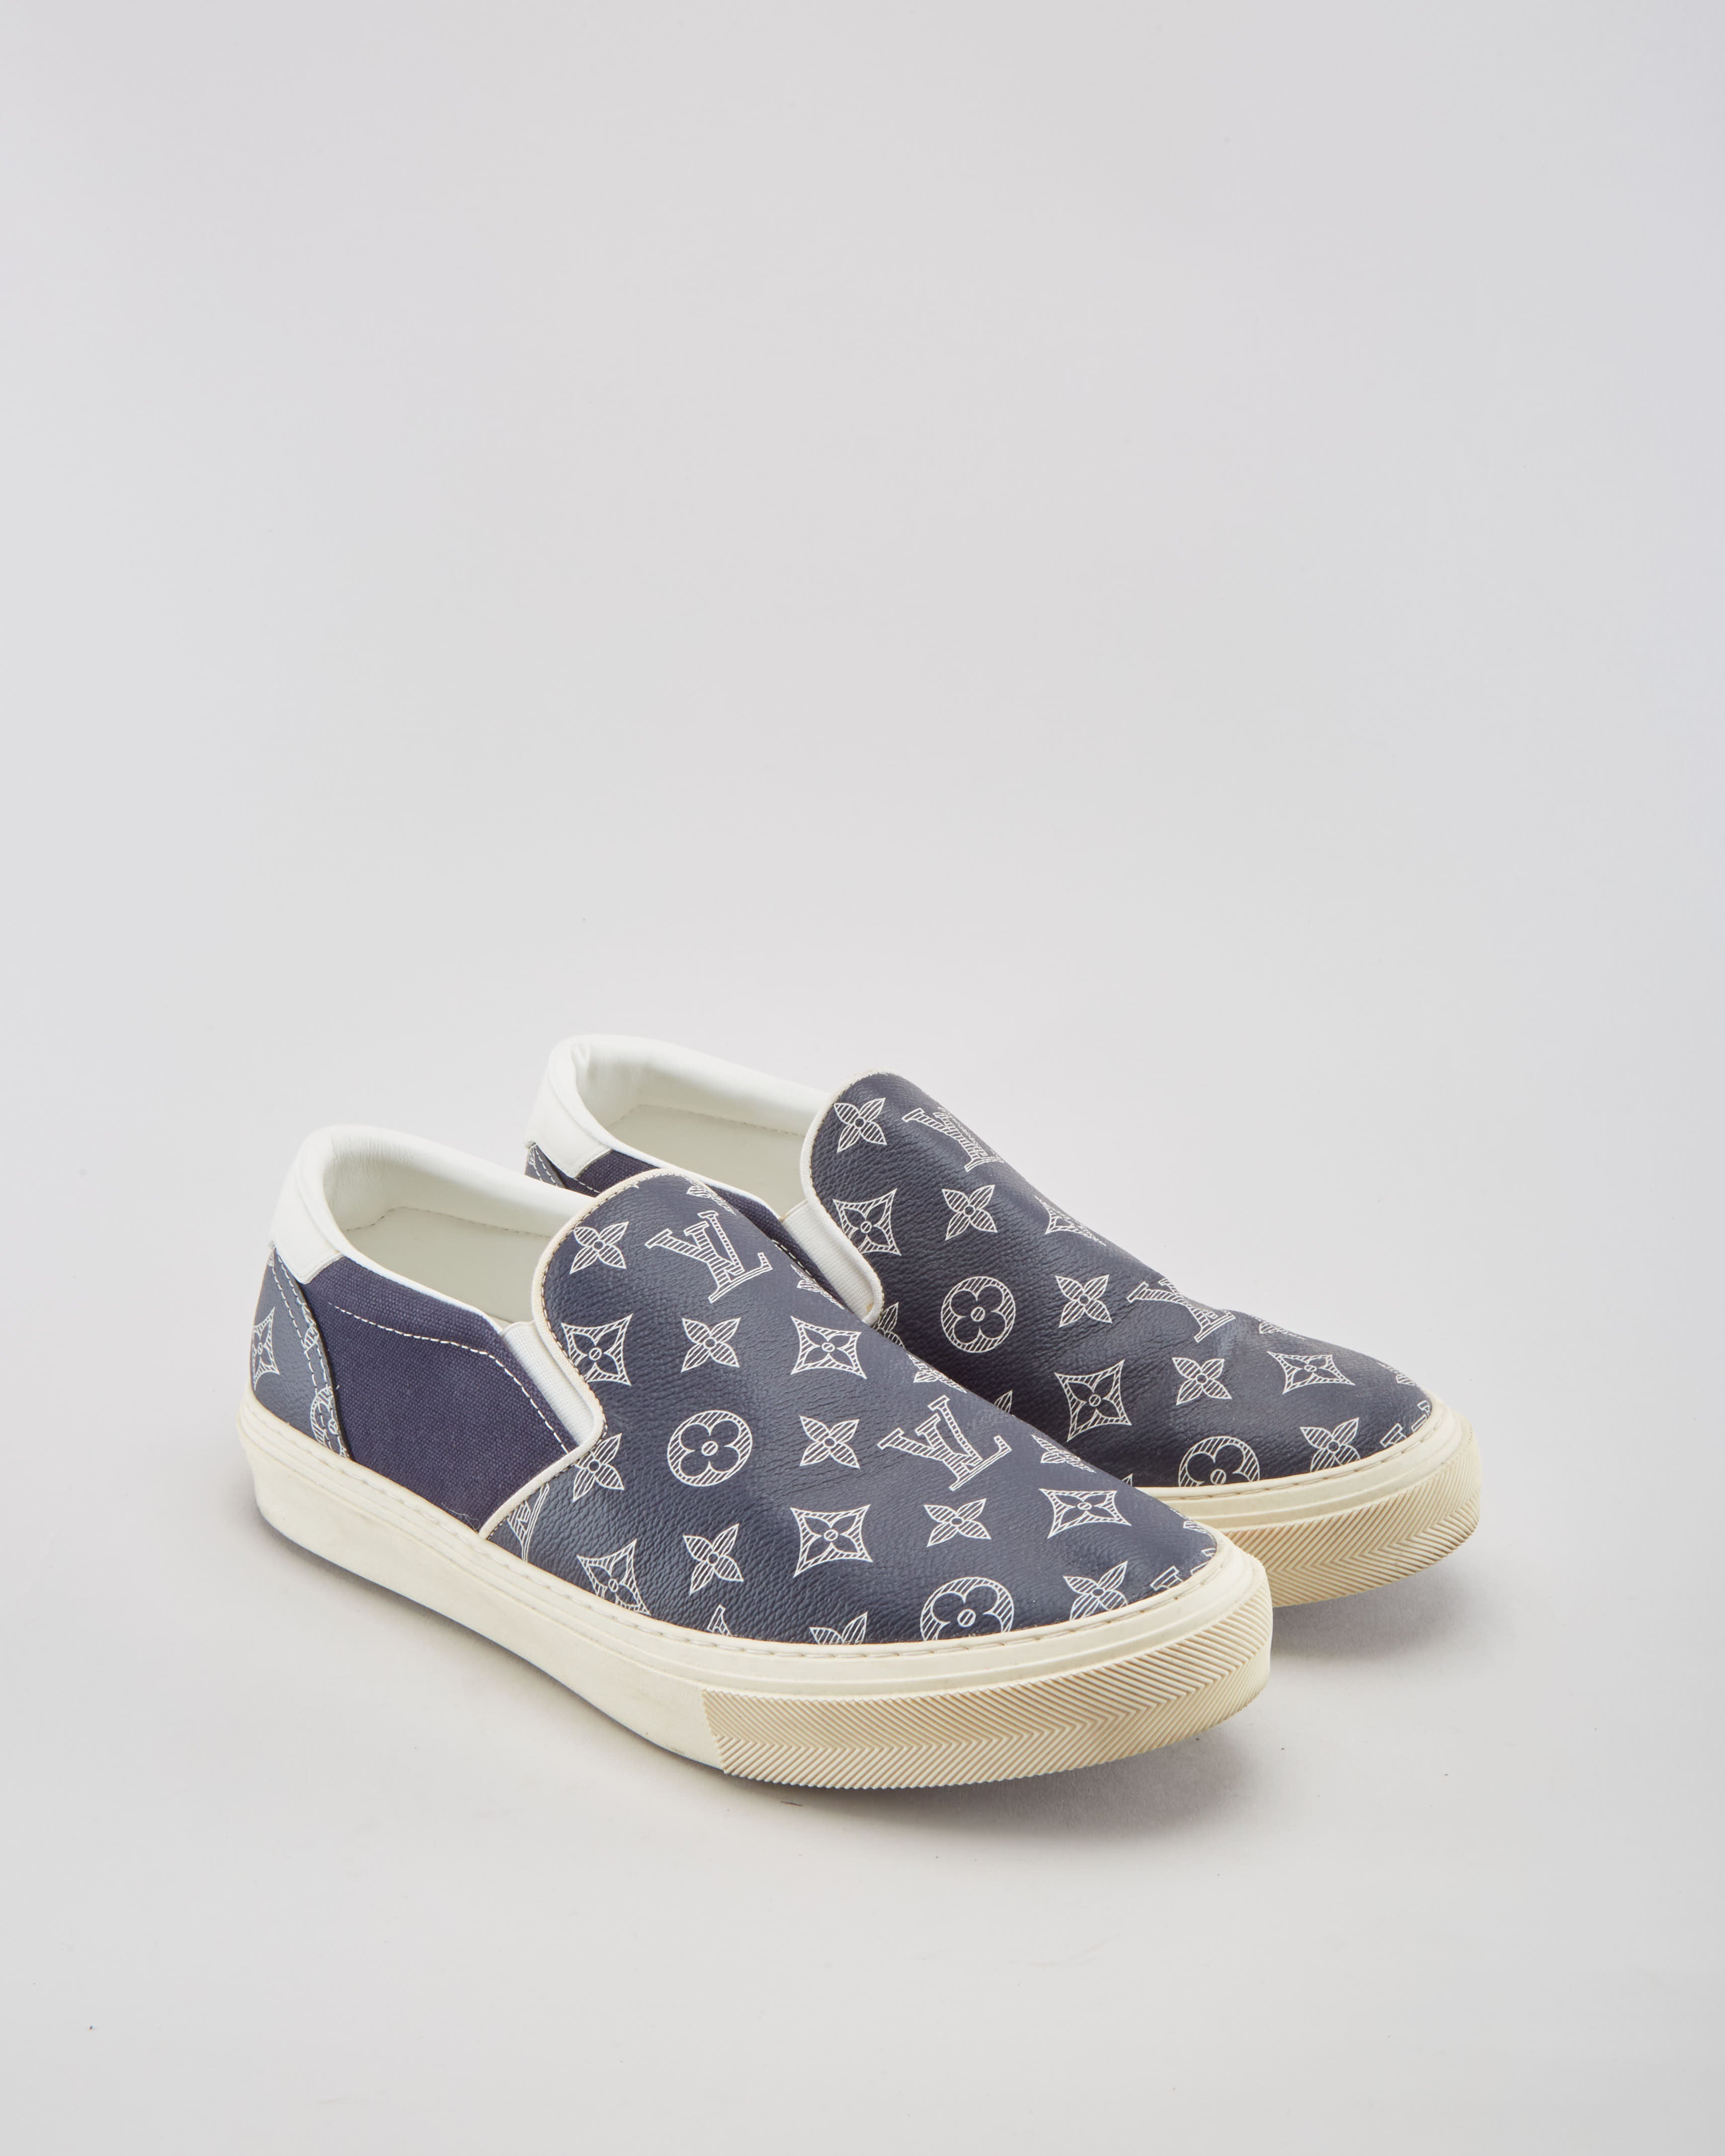 Lv Louis Vuitton Trocadero Monogram Sneakers UK9-9.5, Men's